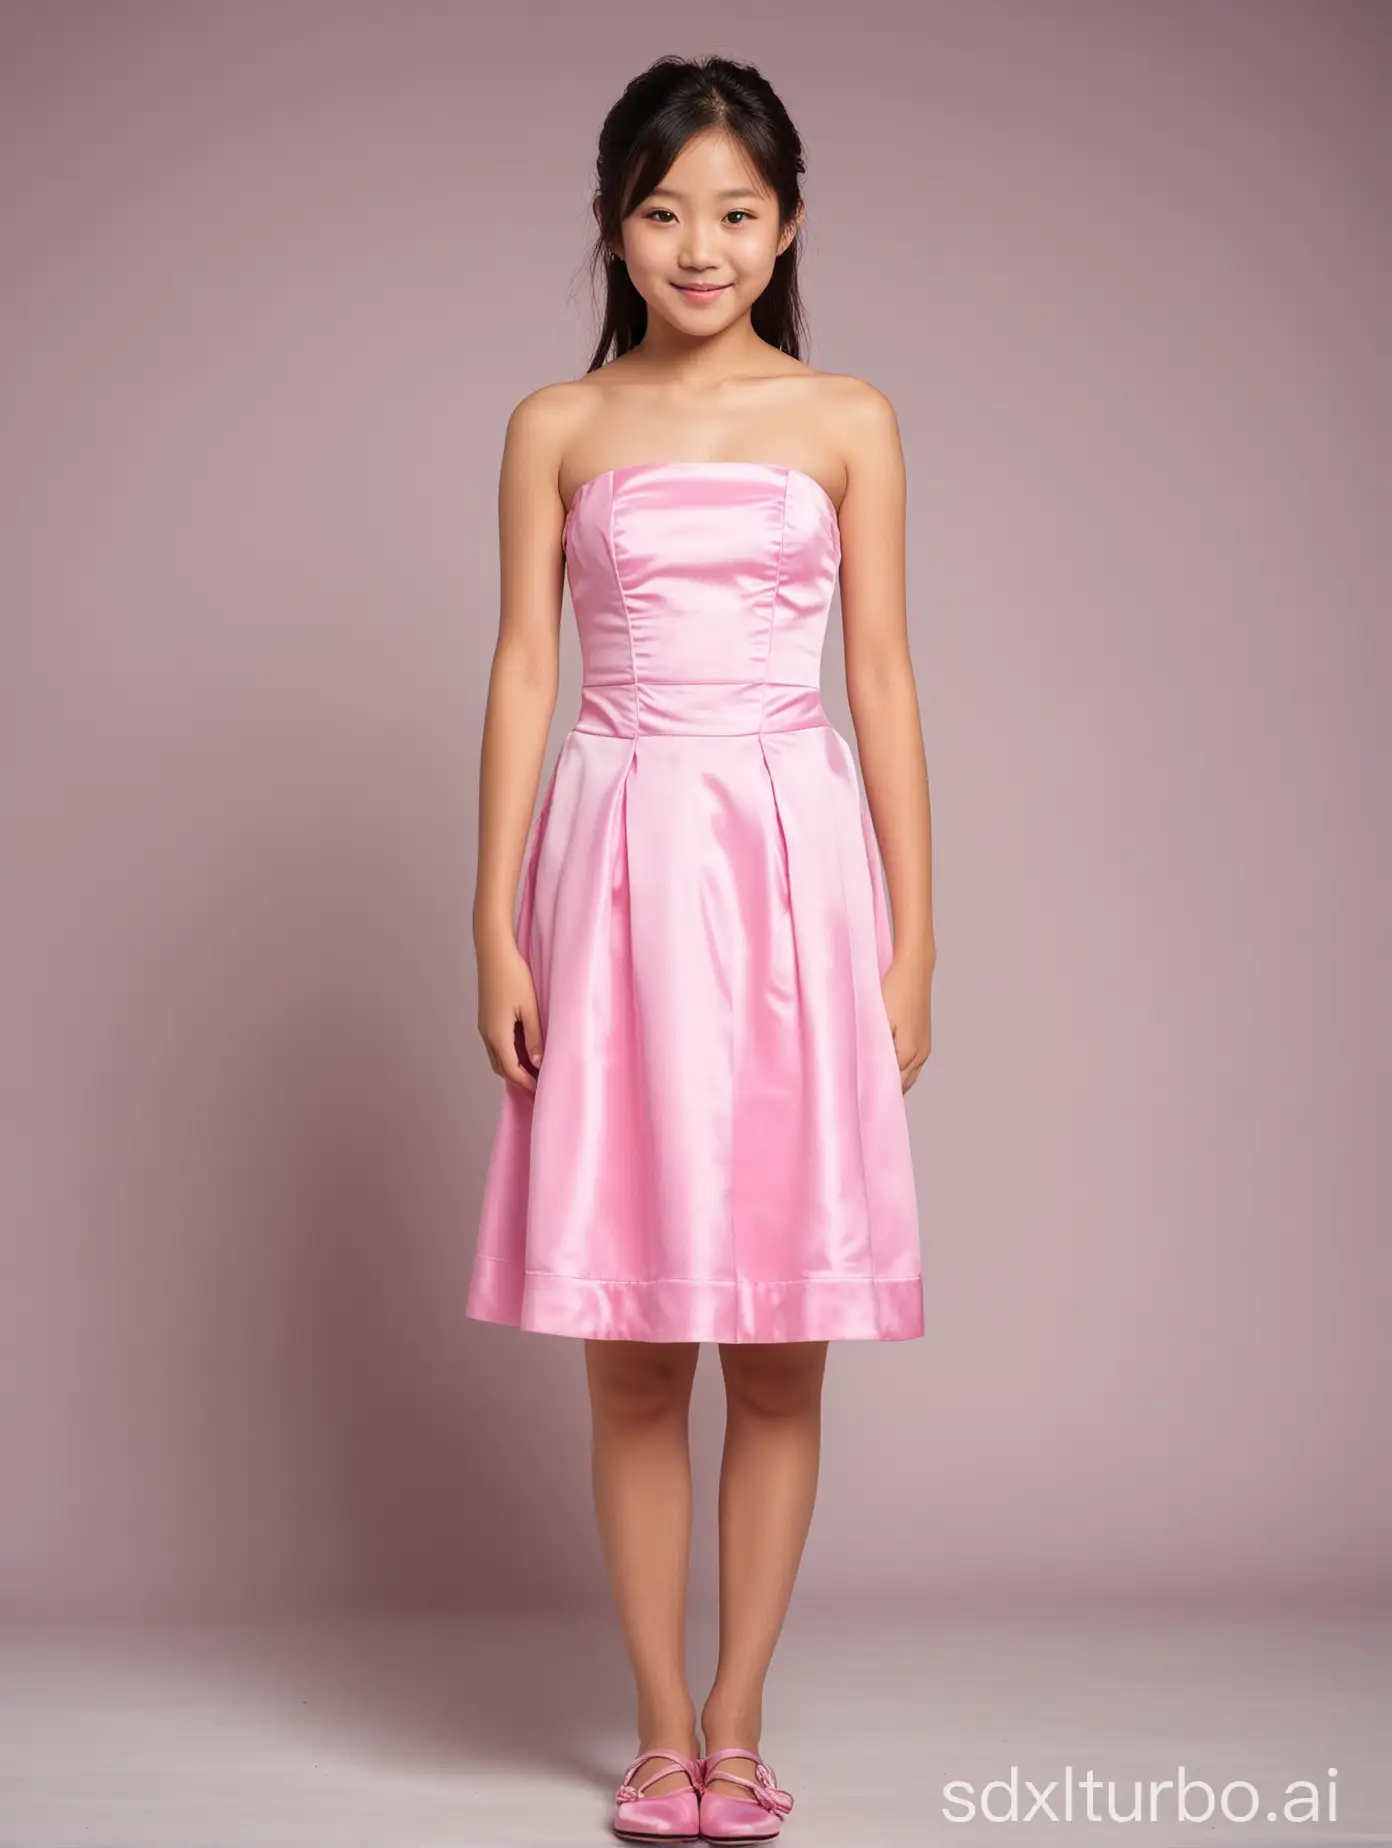 12yo,1girl,Japanese,pink strapless dress,full body